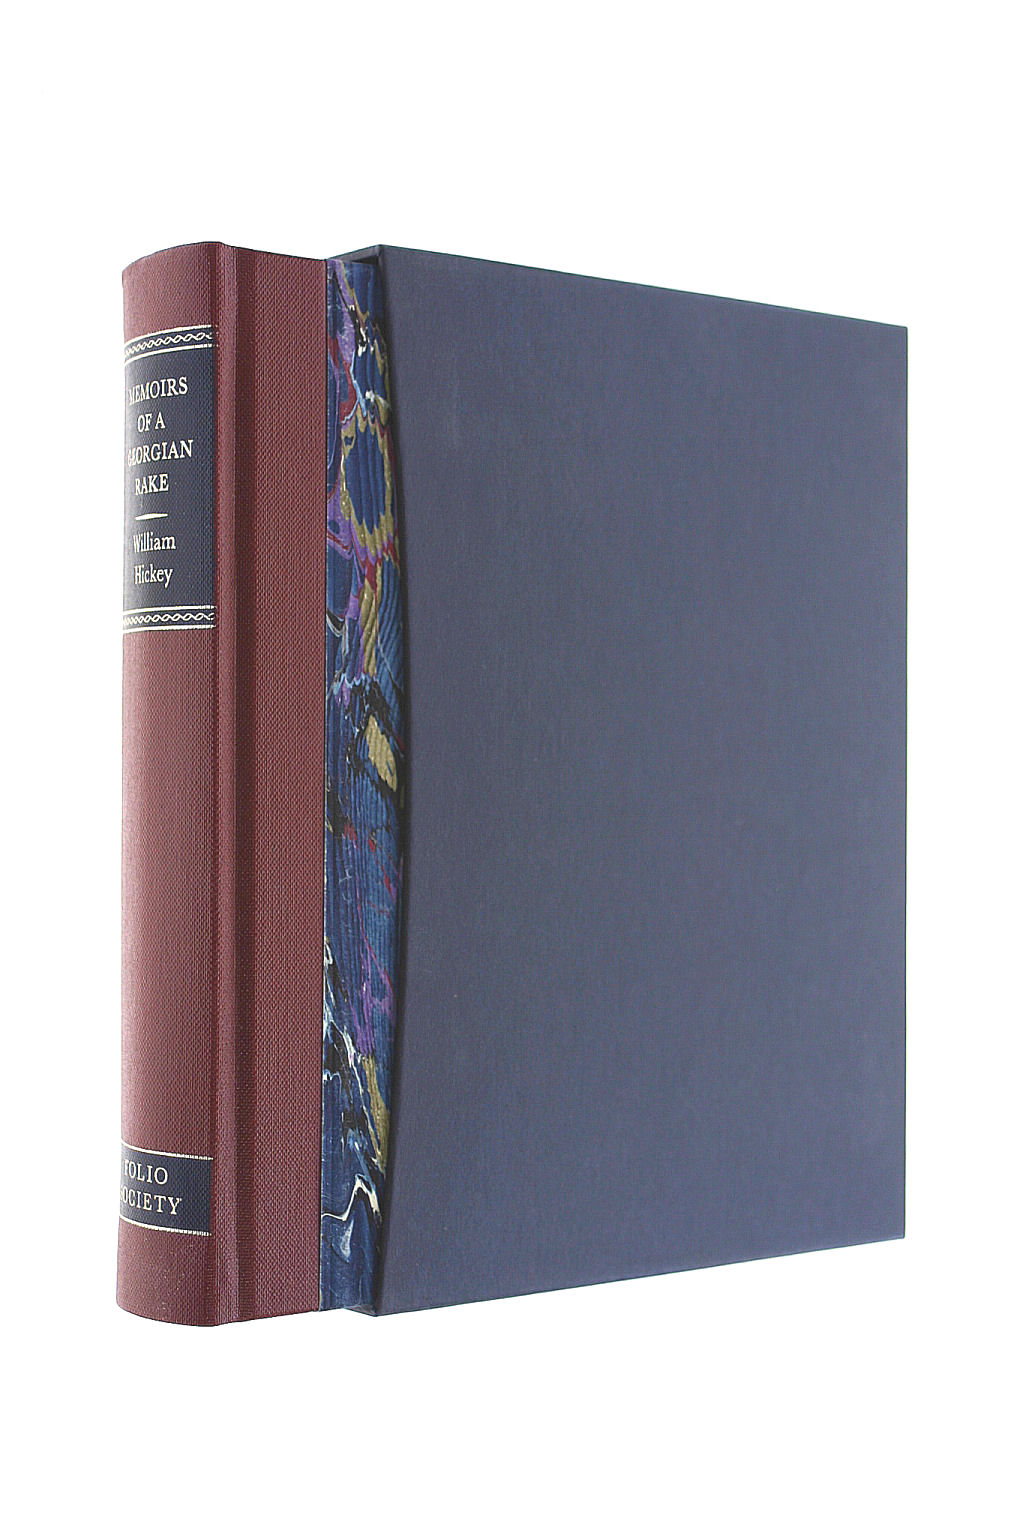 HICKEY,WILLIAM (EDITED BY ROGER HUDSON); JOHN LAWRENCE [ILLUSTRATOR] - Memoirs of a Georgian Rake, Folio Society